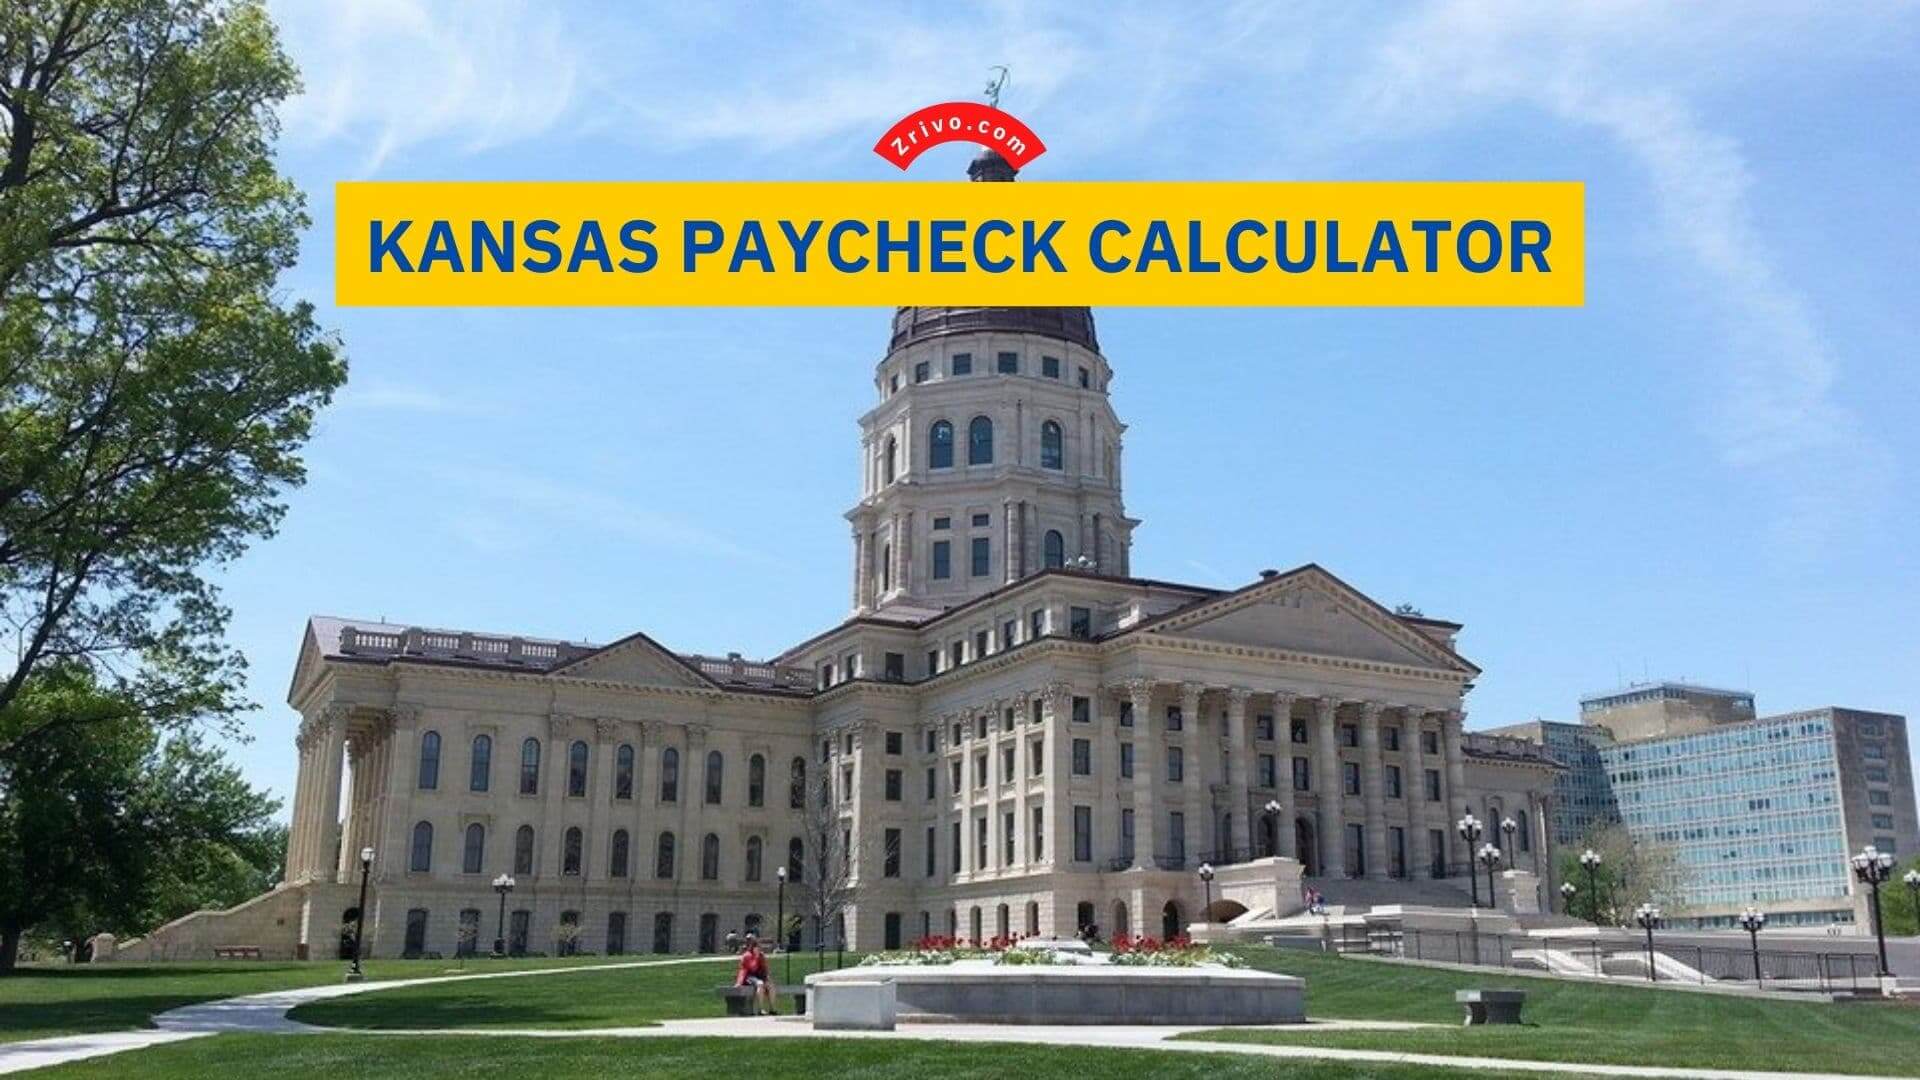 Kansas Paycheck Calculator